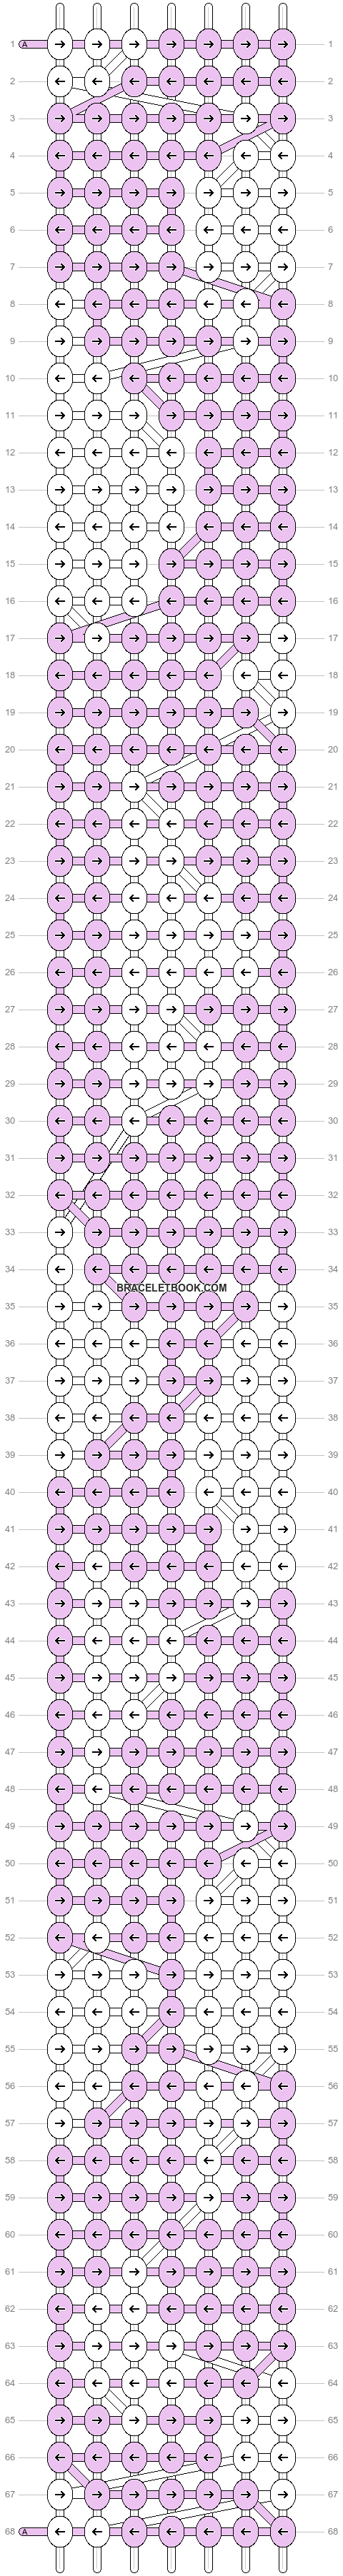 Alpha pattern #1654 variation #27261 pattern